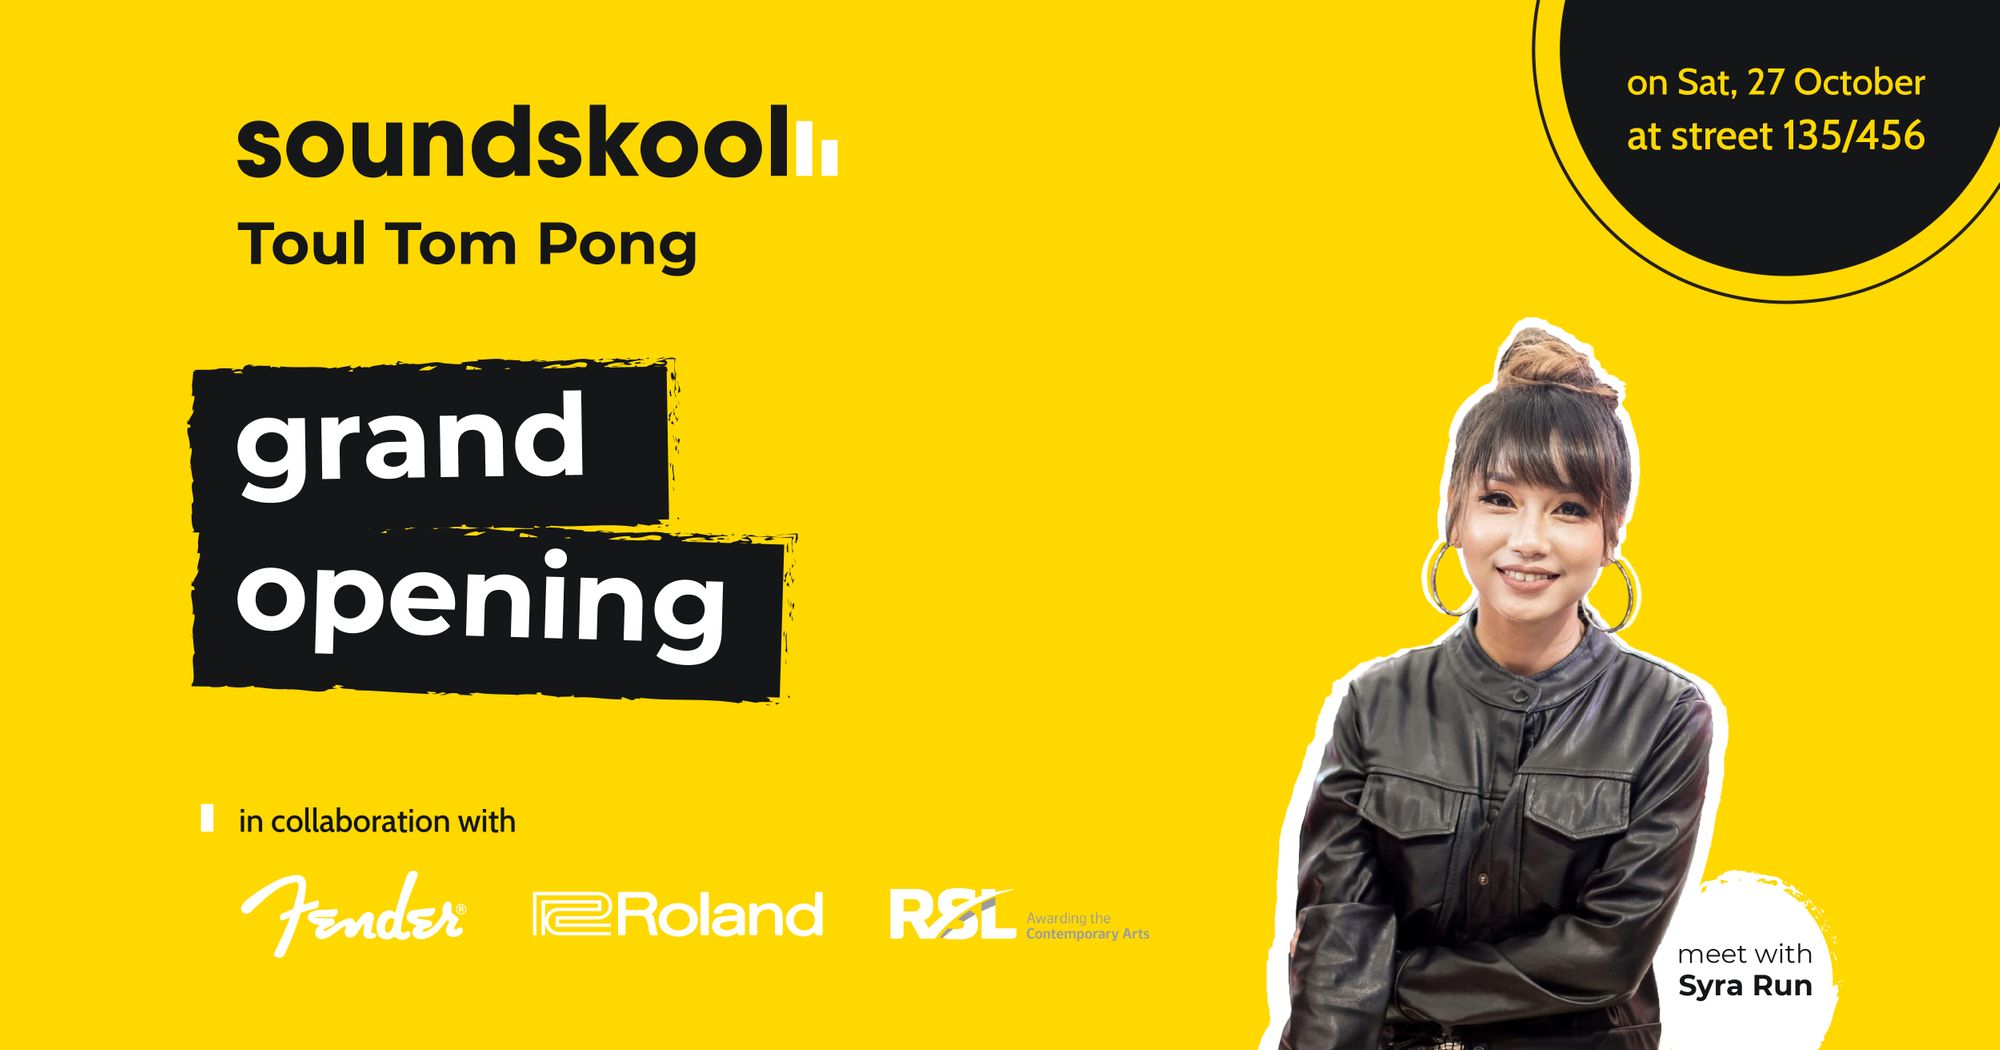 Soundskool Music Toul Tom Pong / Grand Opening!